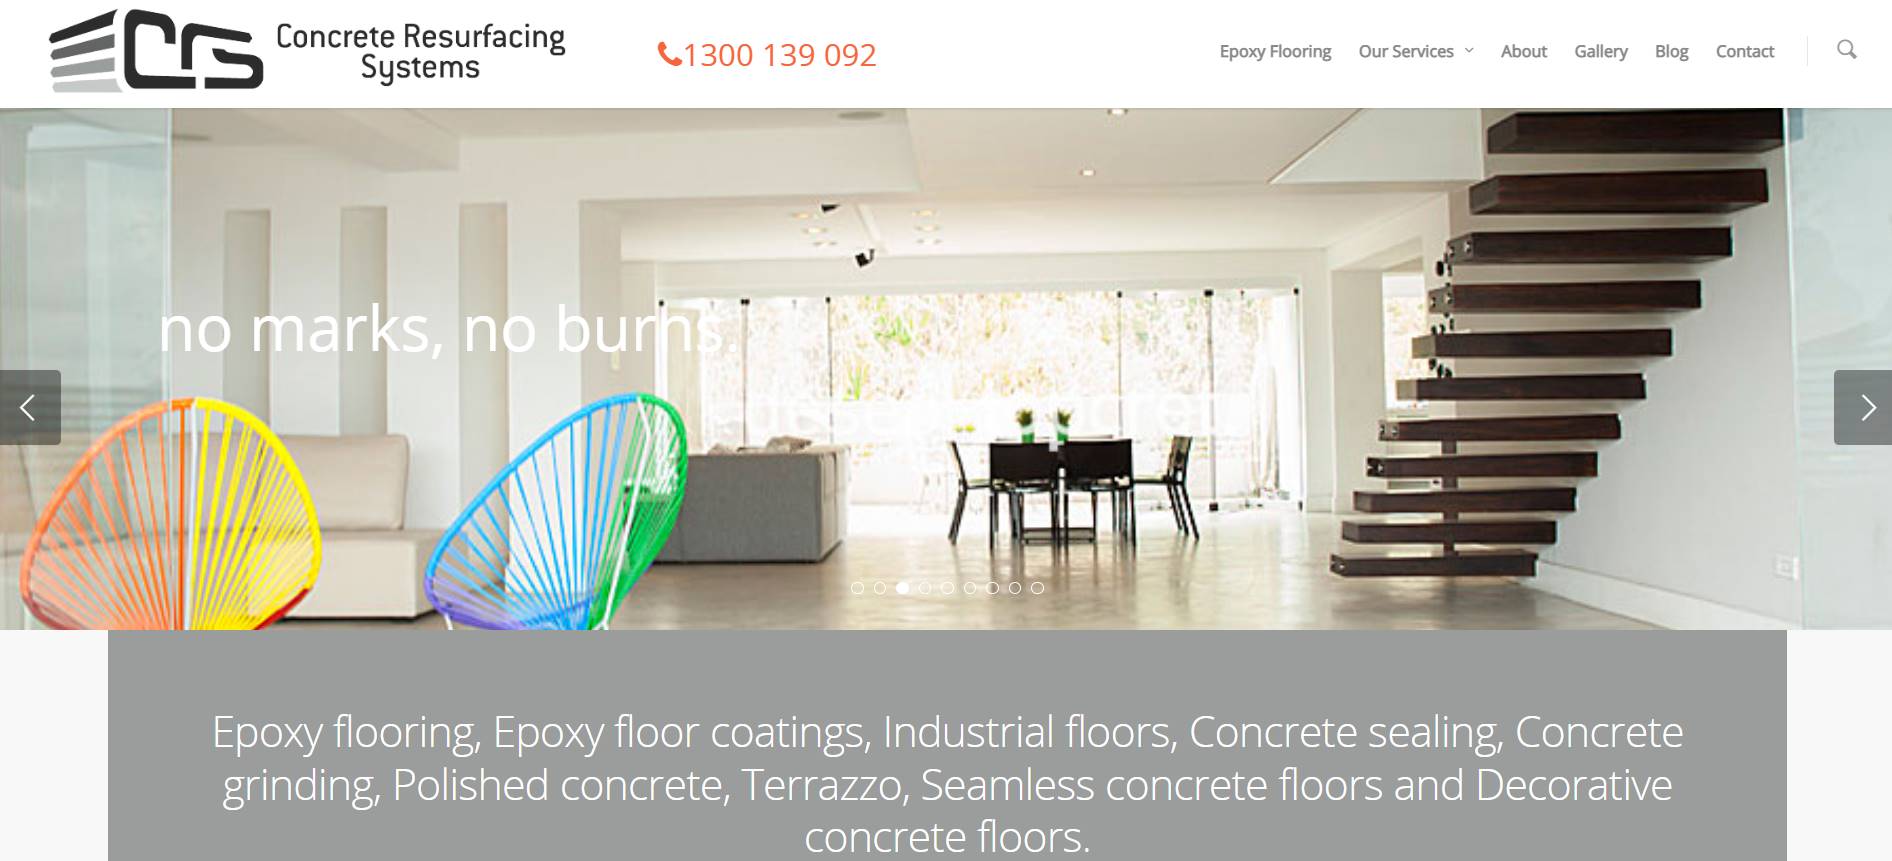 concrete resurfacing systems epoxy flooring & coatings melbourne